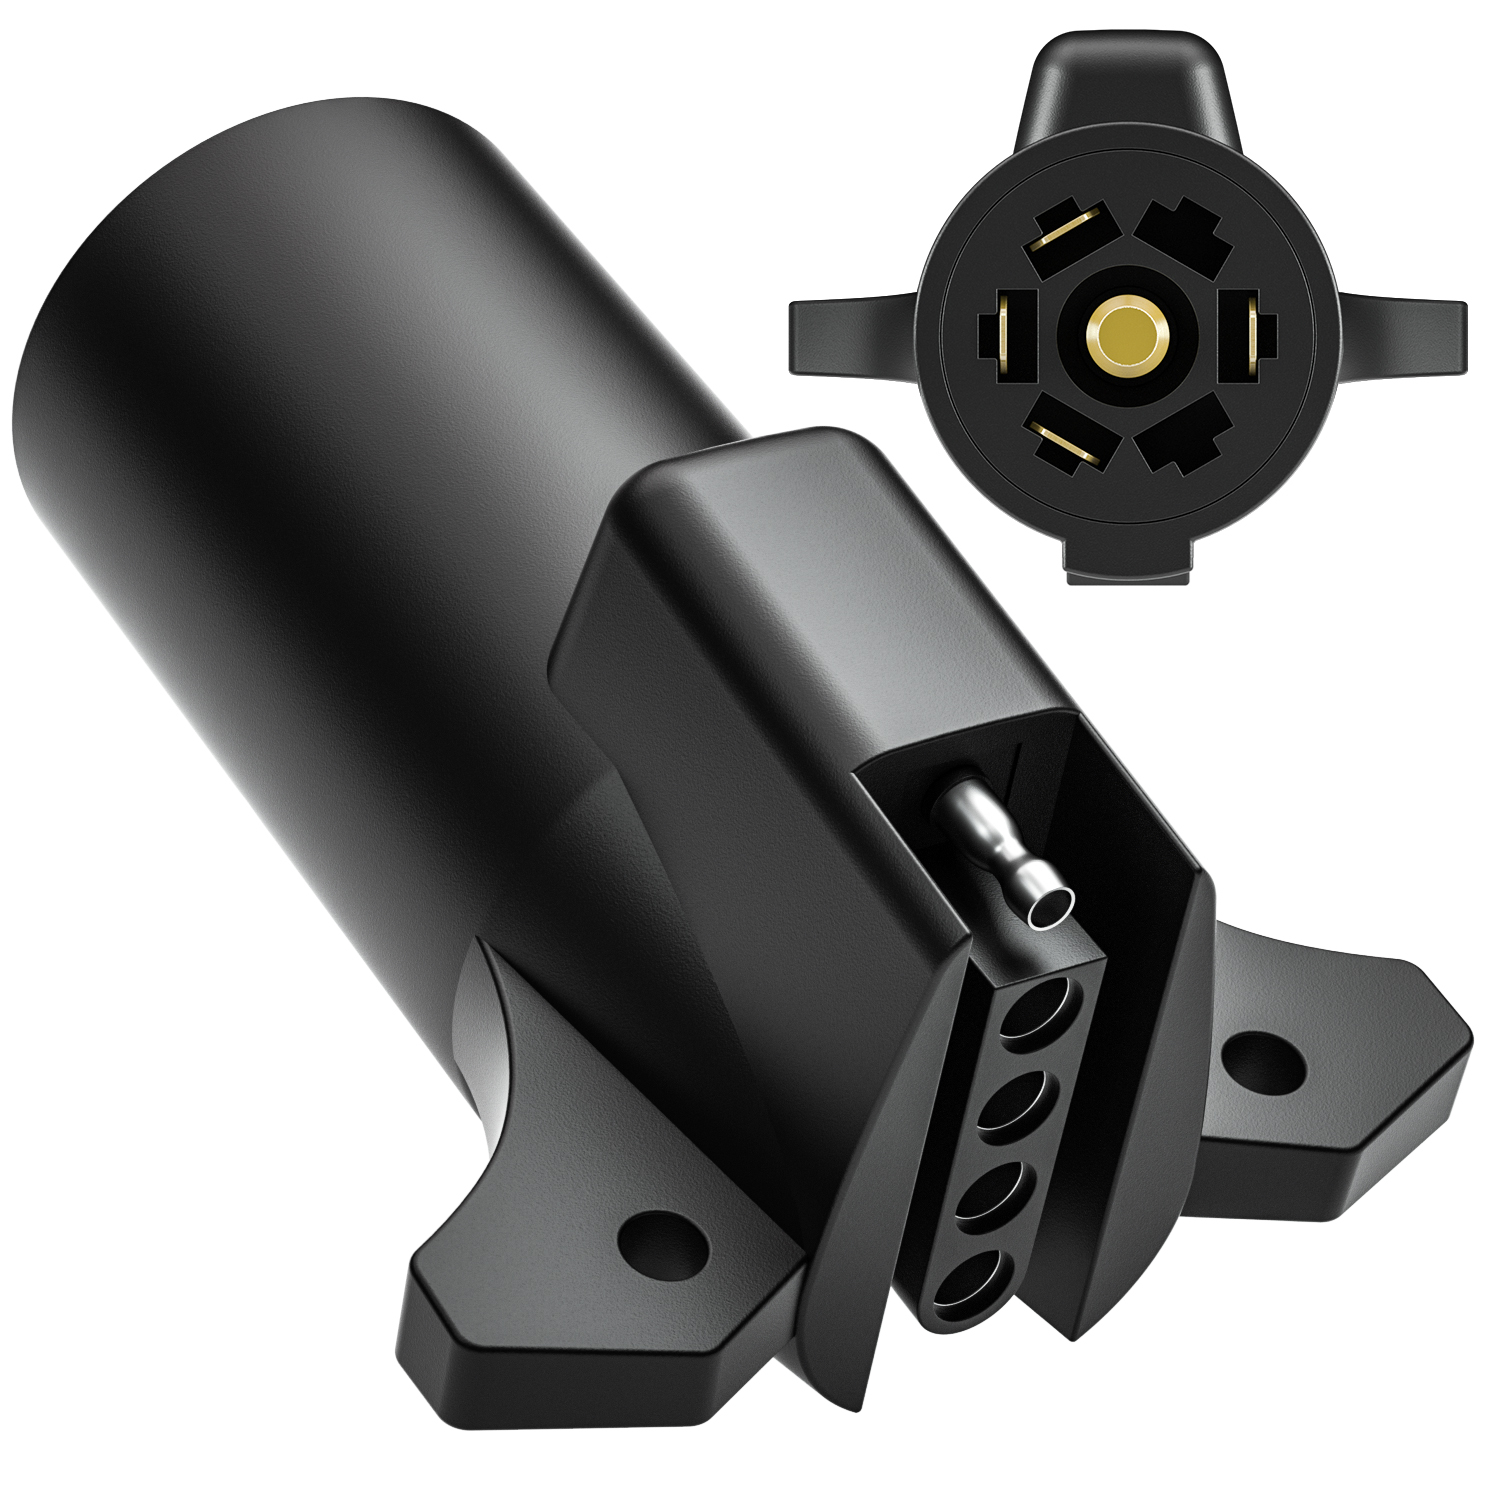 MICTUNING Heavy Duty 7 pin to 5 pin Trailer Adapter Plug Weatherproof